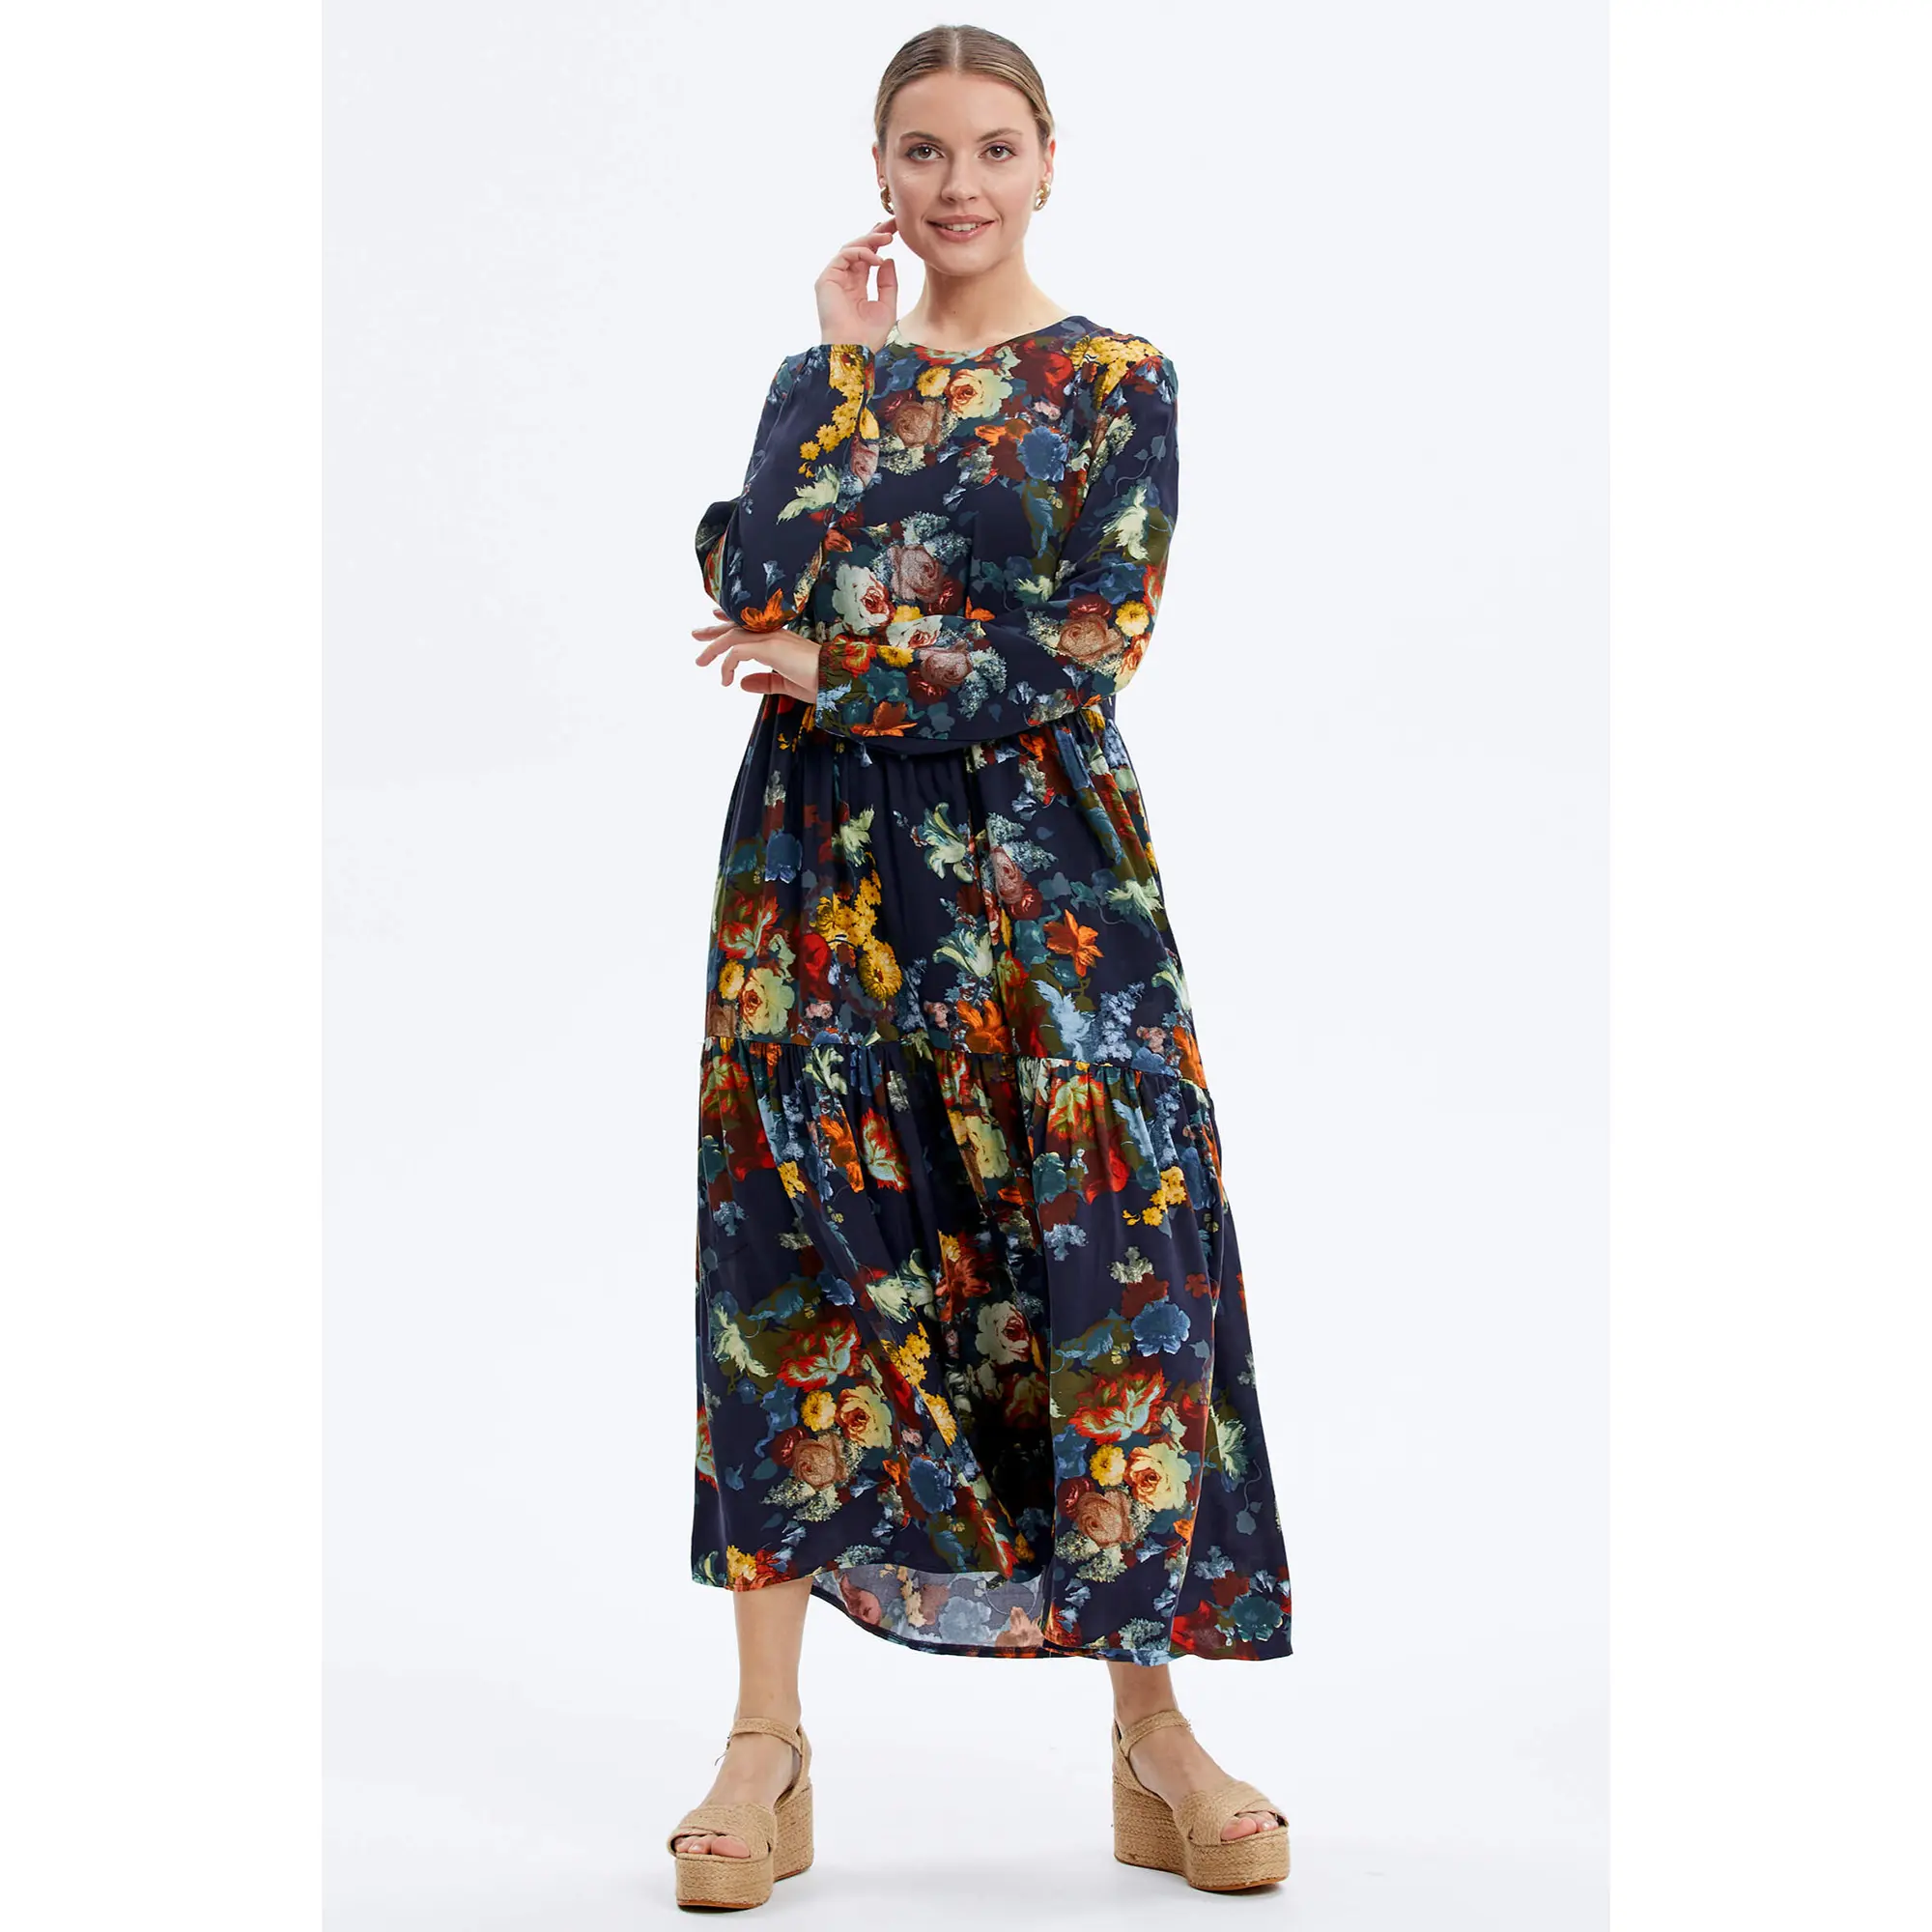 Women's Plus Size Floral Patterned Dress